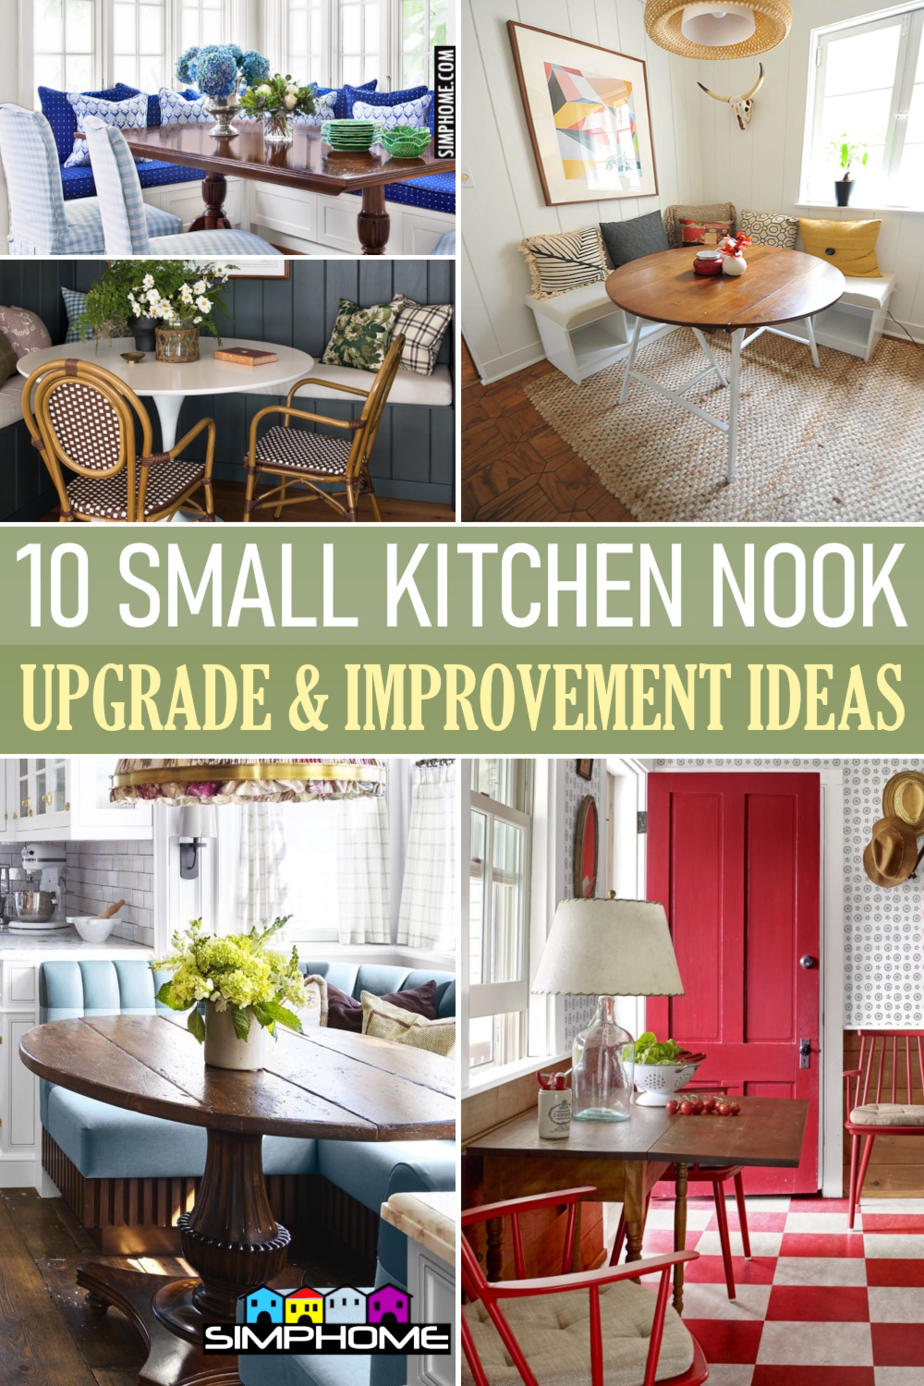 10 Small Kitchen Nook Ideas via Simphome.comFeatured Image